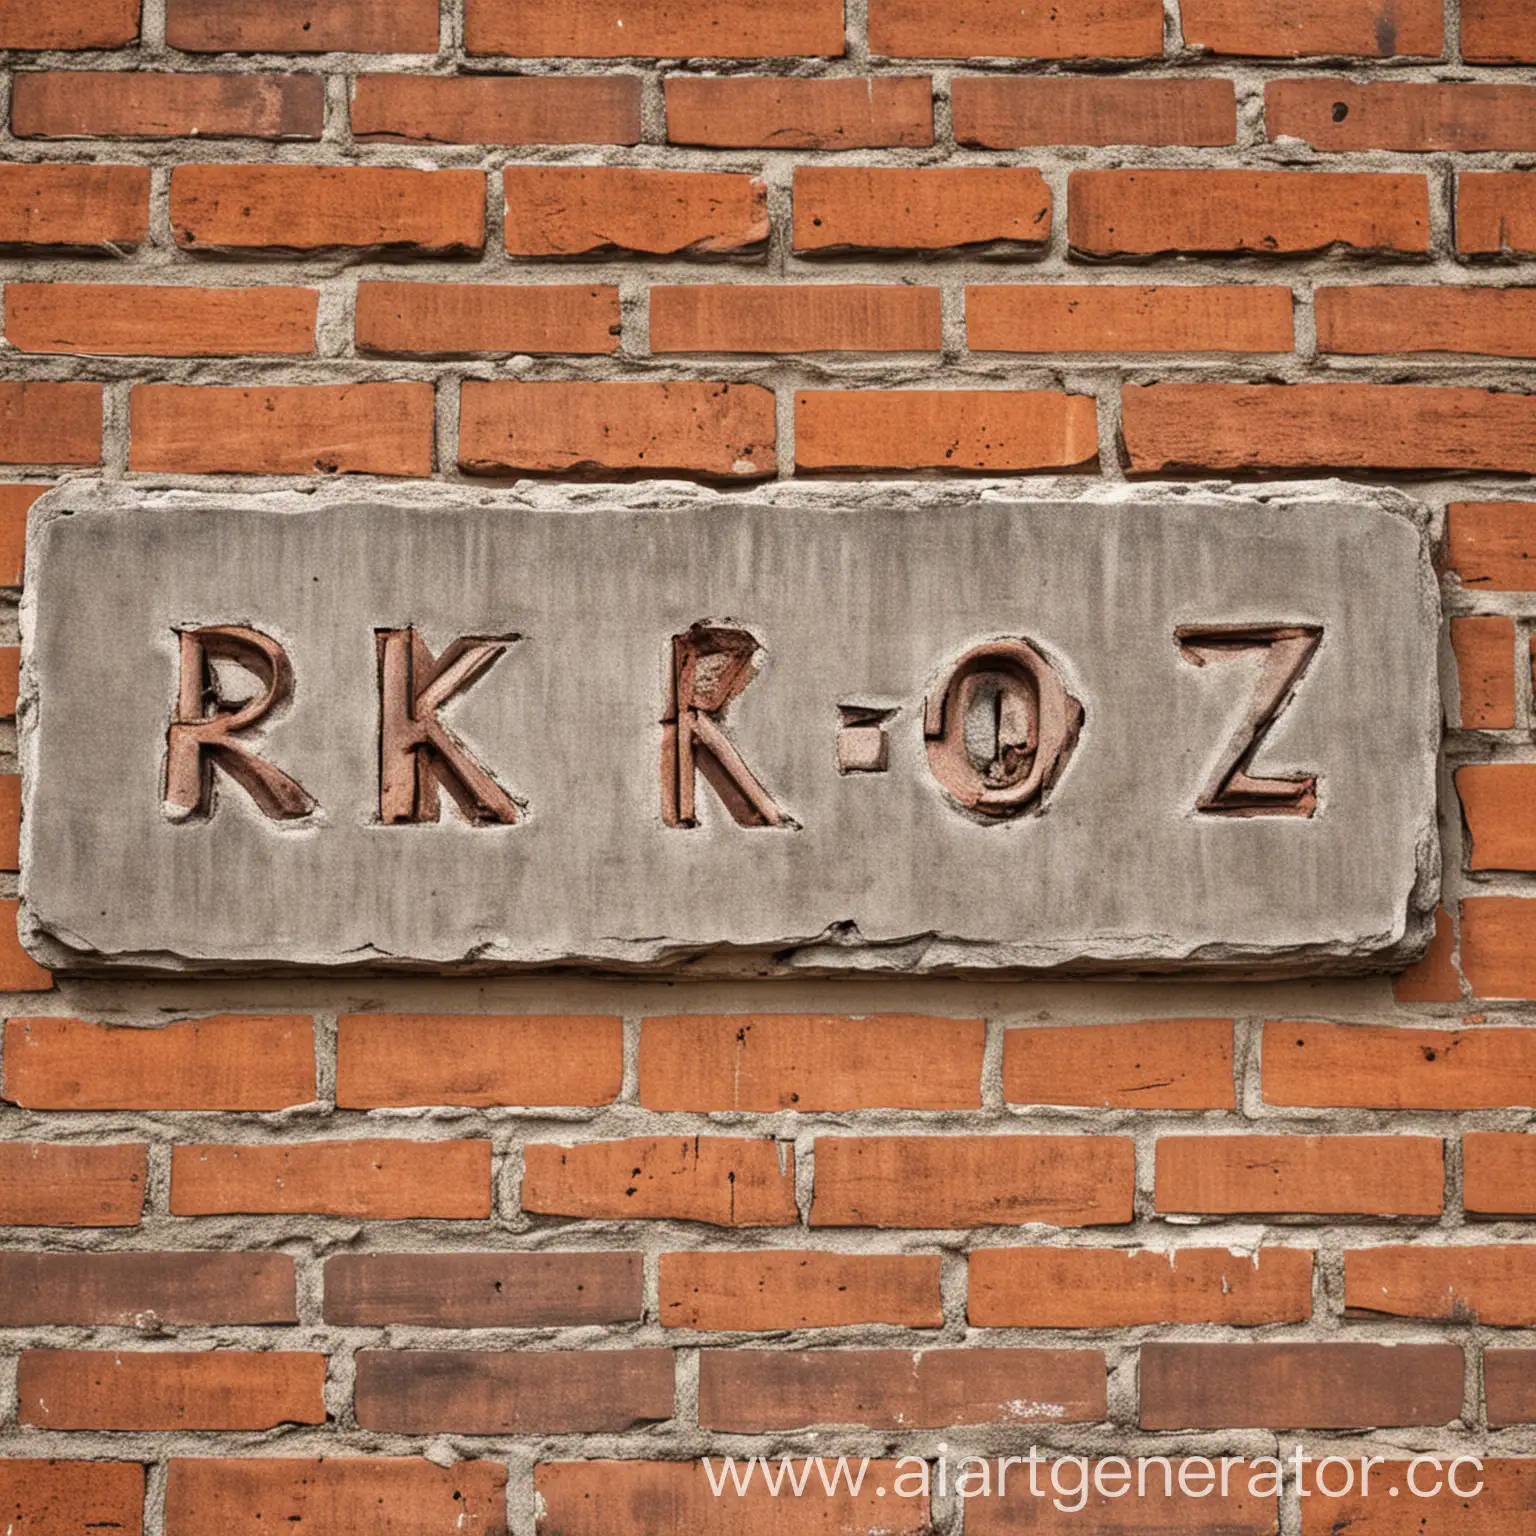 The inscription R K O Z on a brick wall